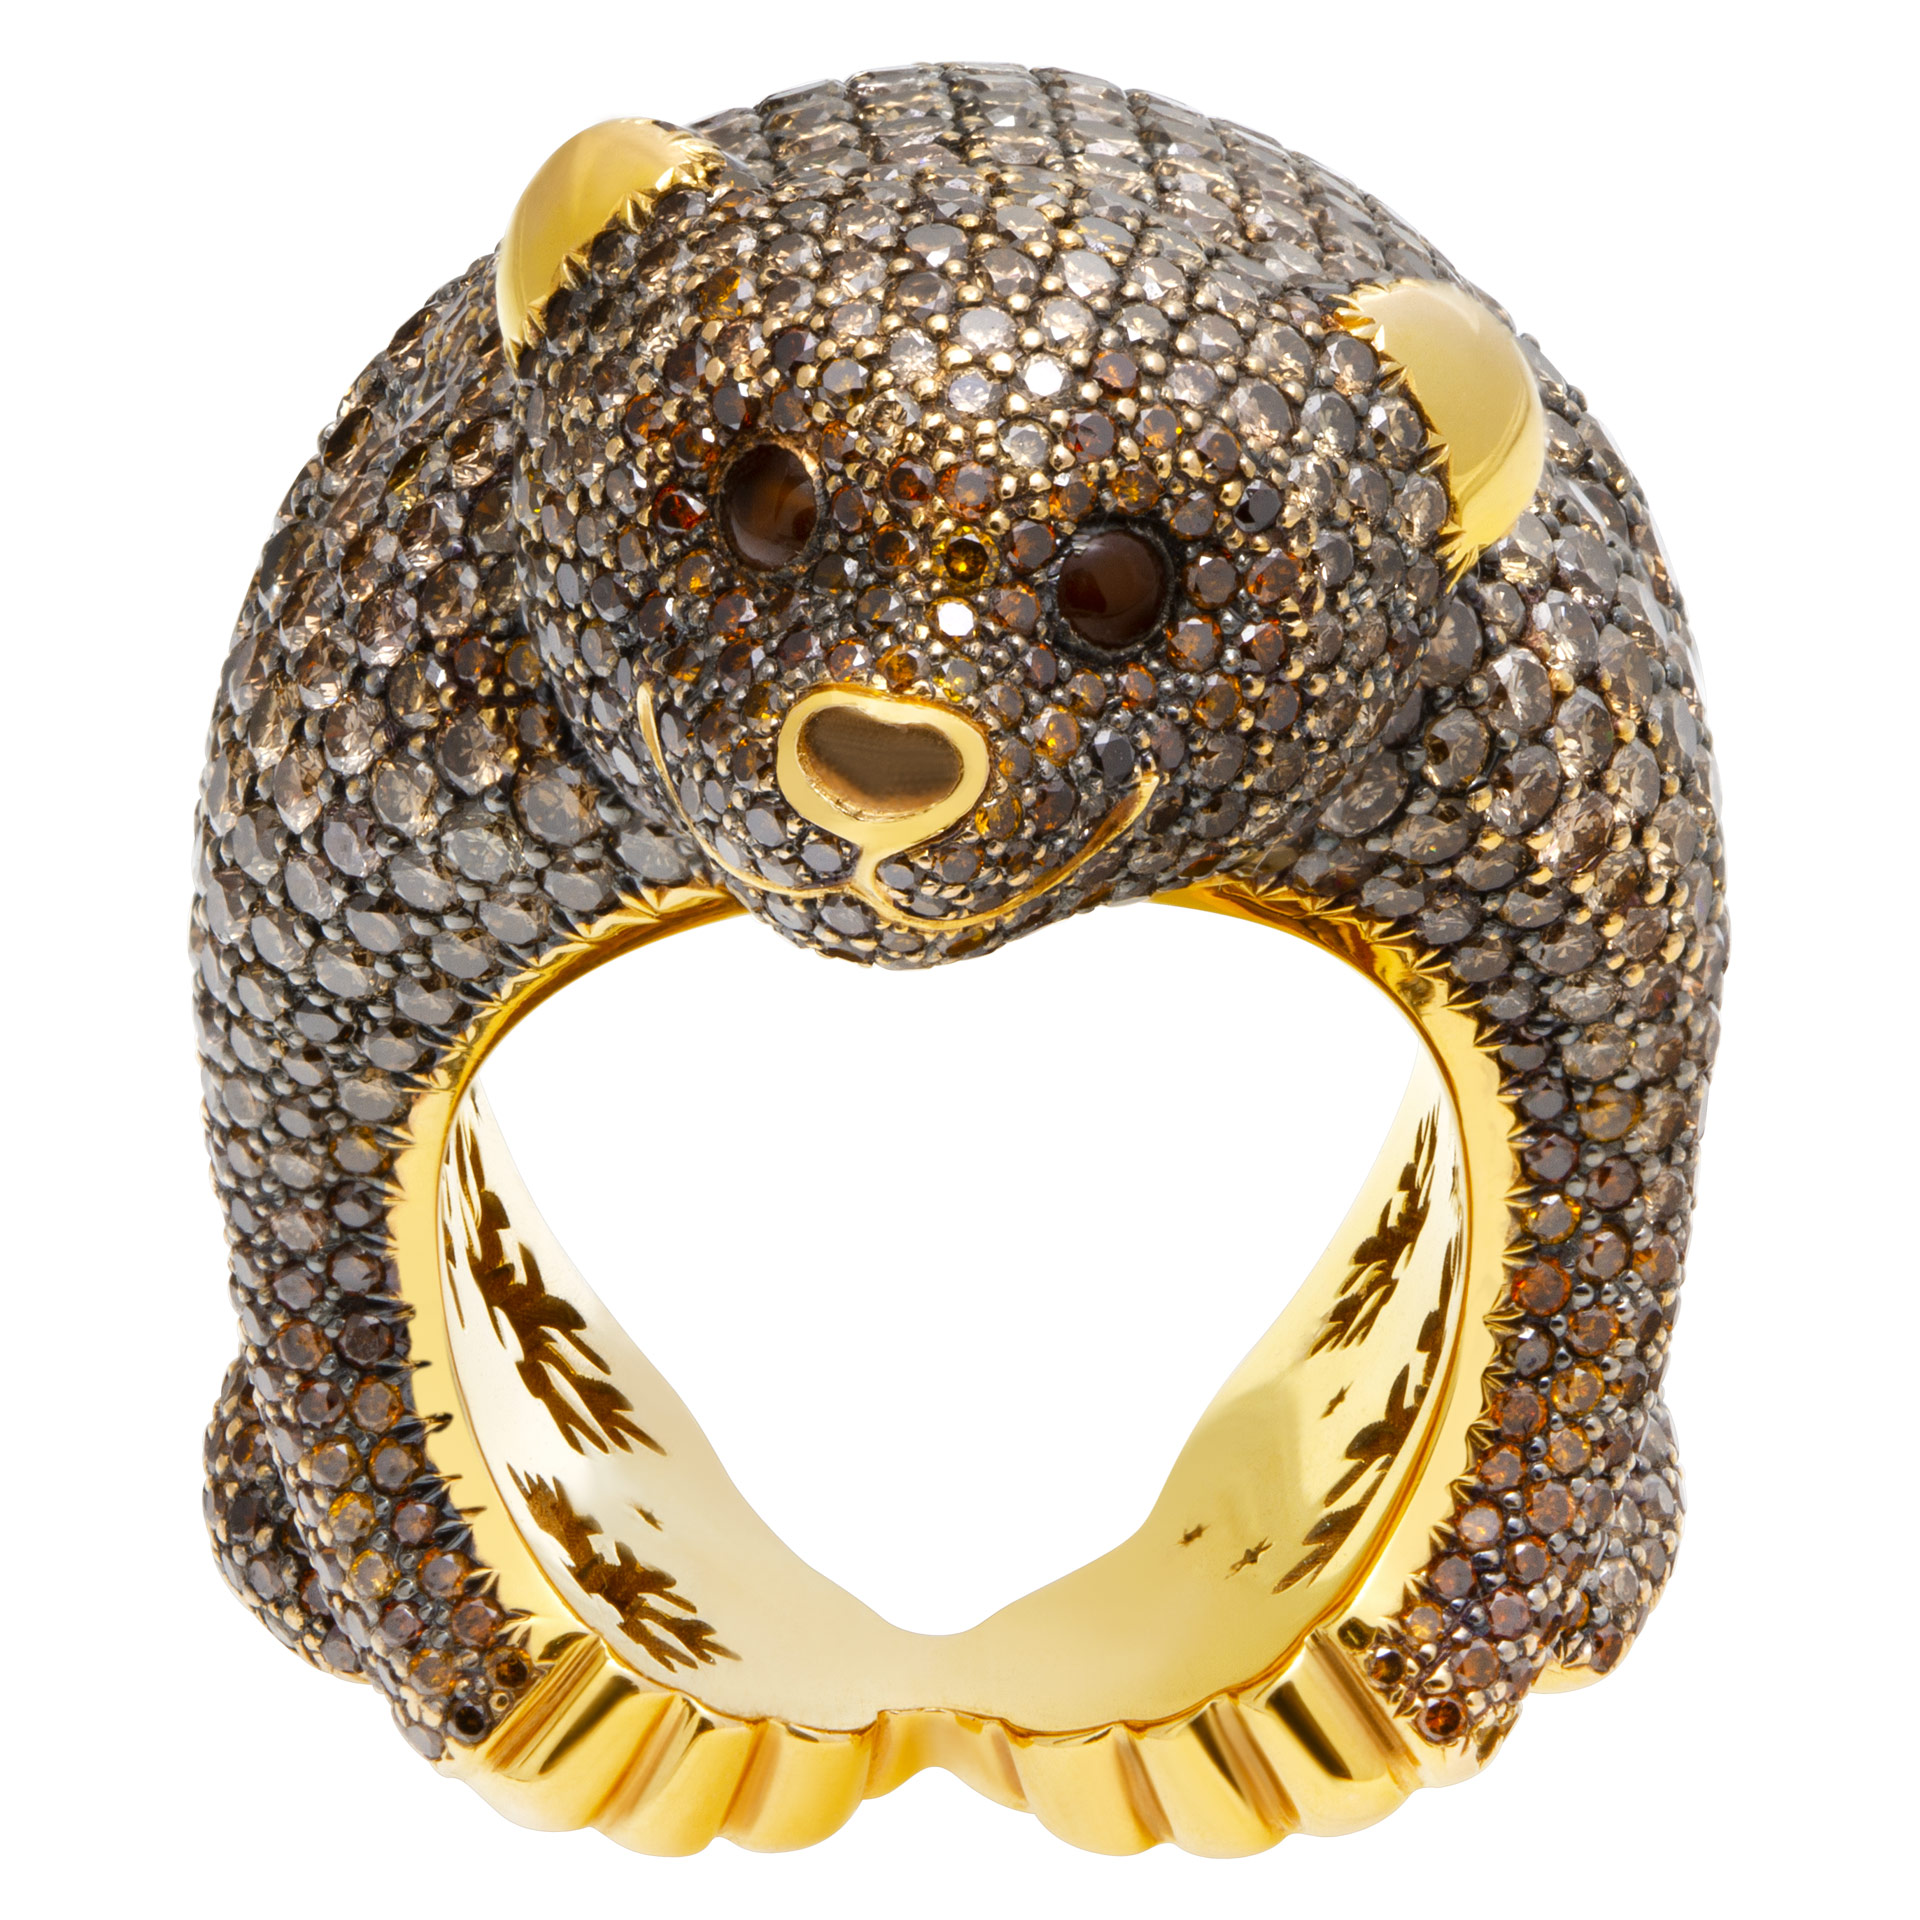 Masterpiece Chopard Diamond bear "Animal World Collection" 18K Ring